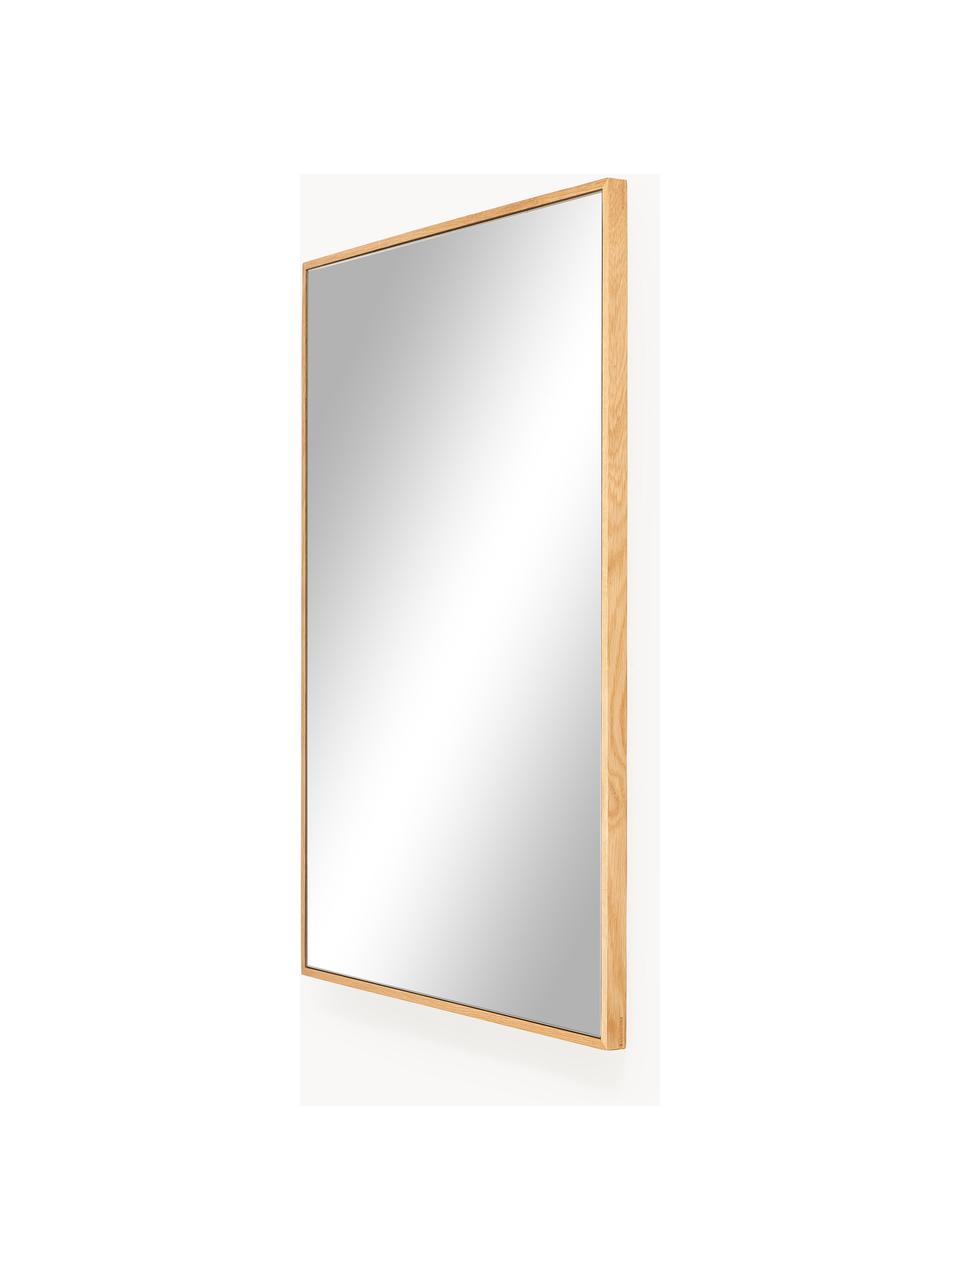 Eckiger Wandspiegel Avery mit Eichenholzrahmen, Rahmen: Eichenholz, Spiegelfläche: Spiegelglas Dieses Produk, Eichenholz, B 50 x H 70 cm